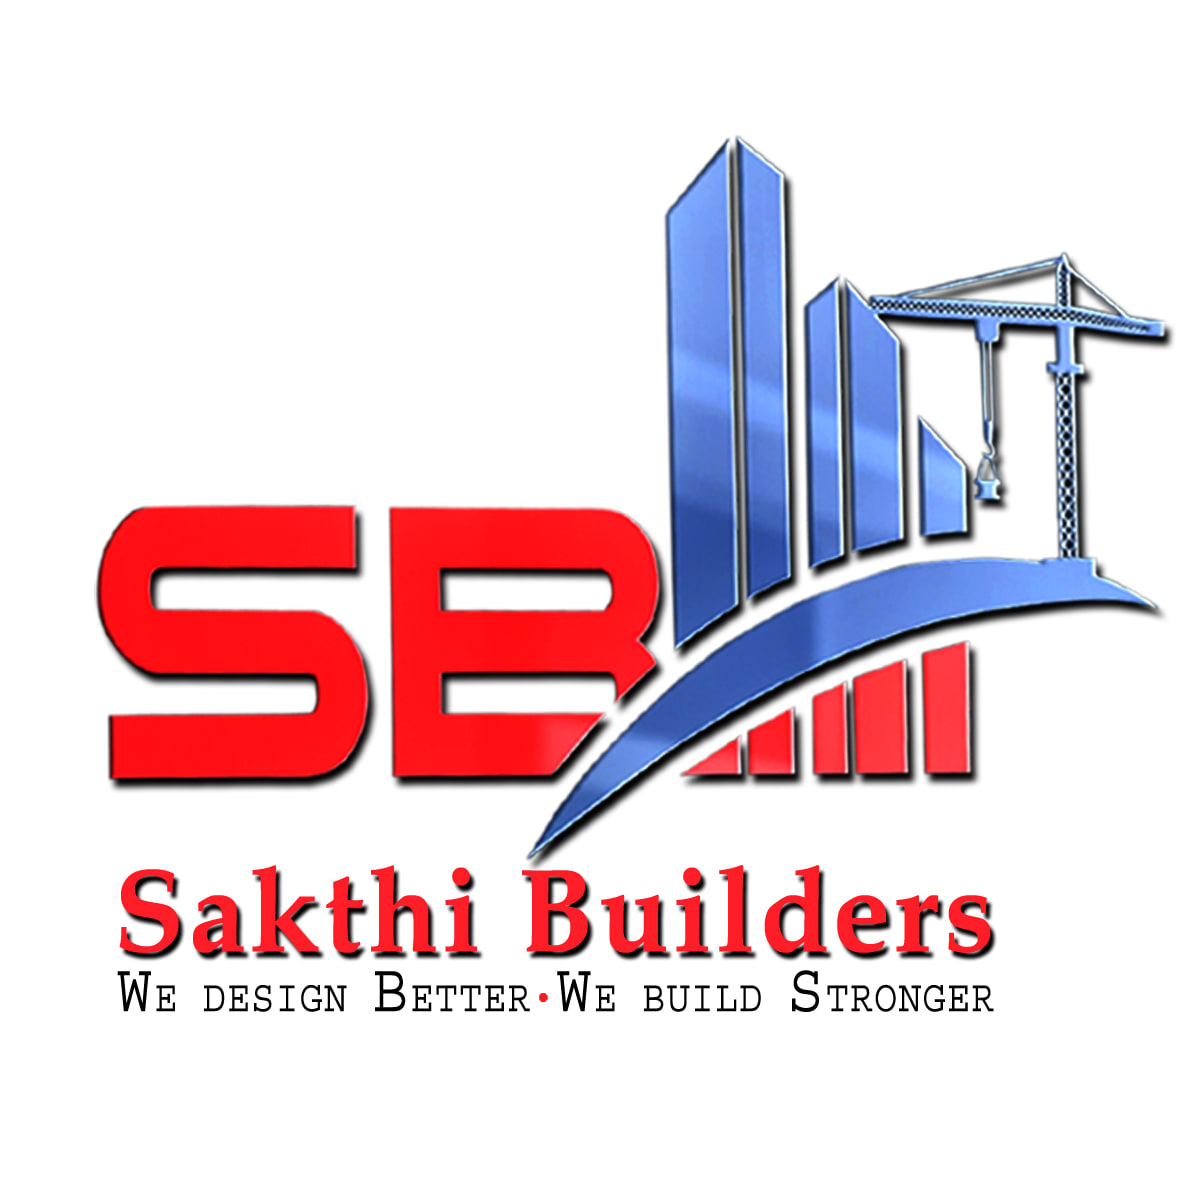 Sakthi Builders